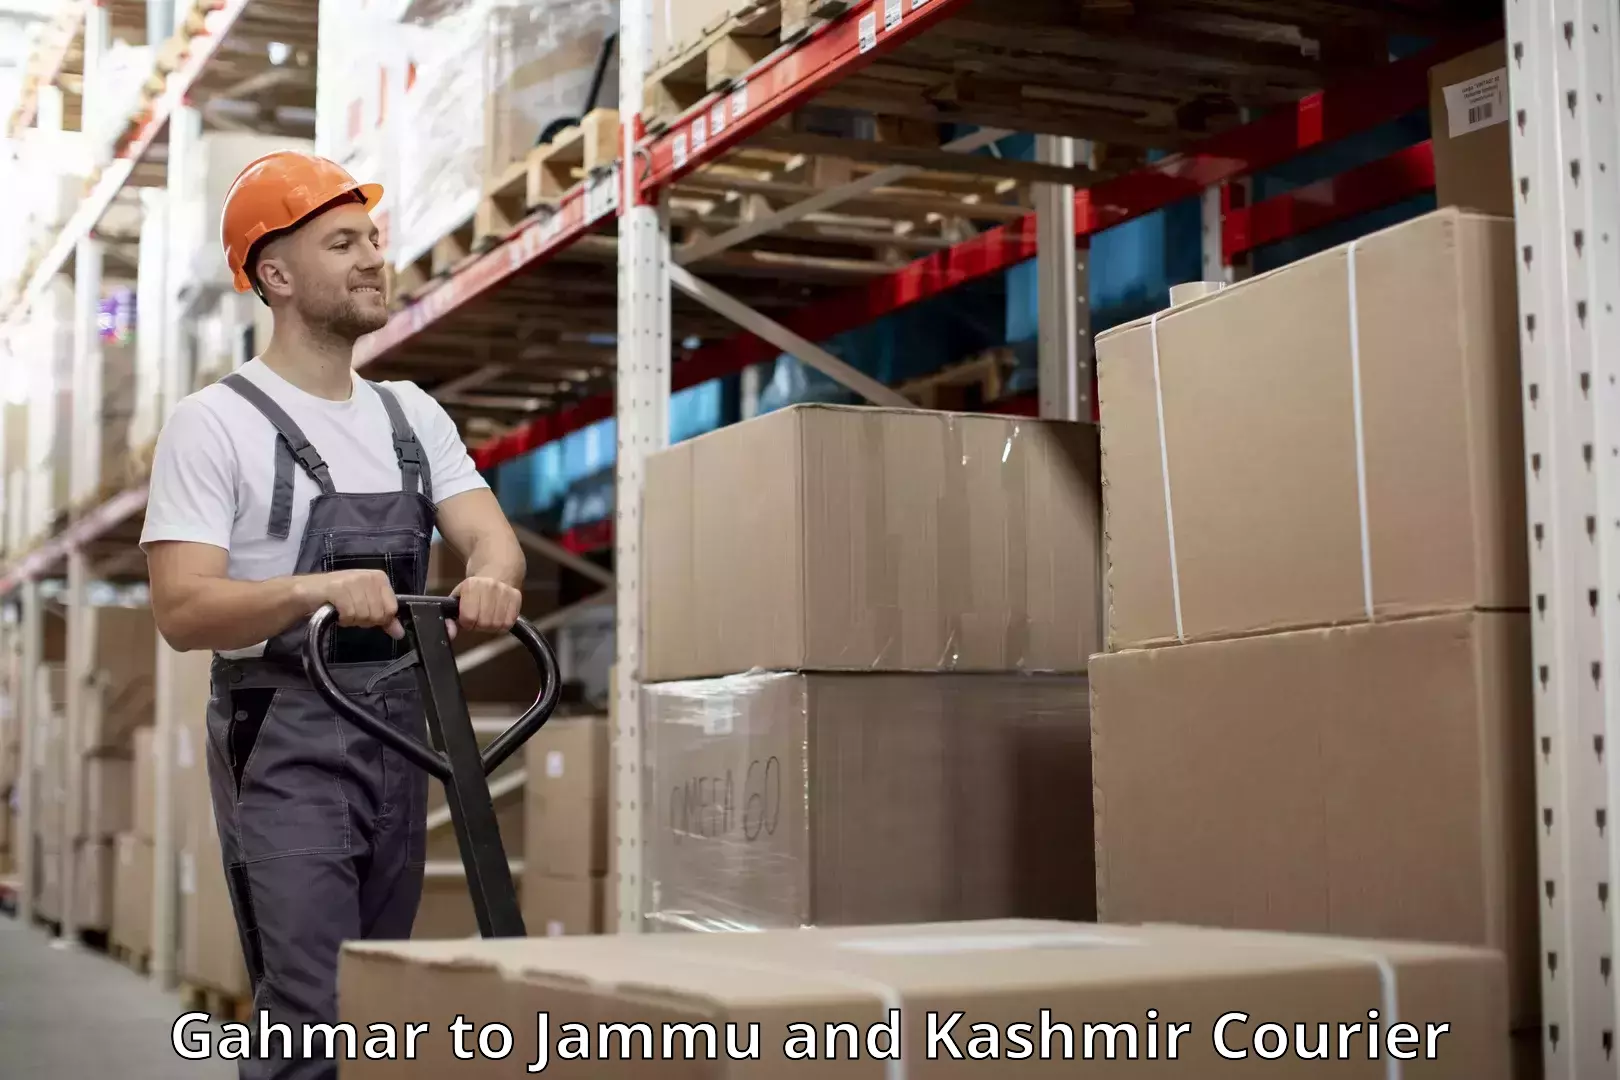 Baggage transport network Gahmar to Jammu and Kashmir